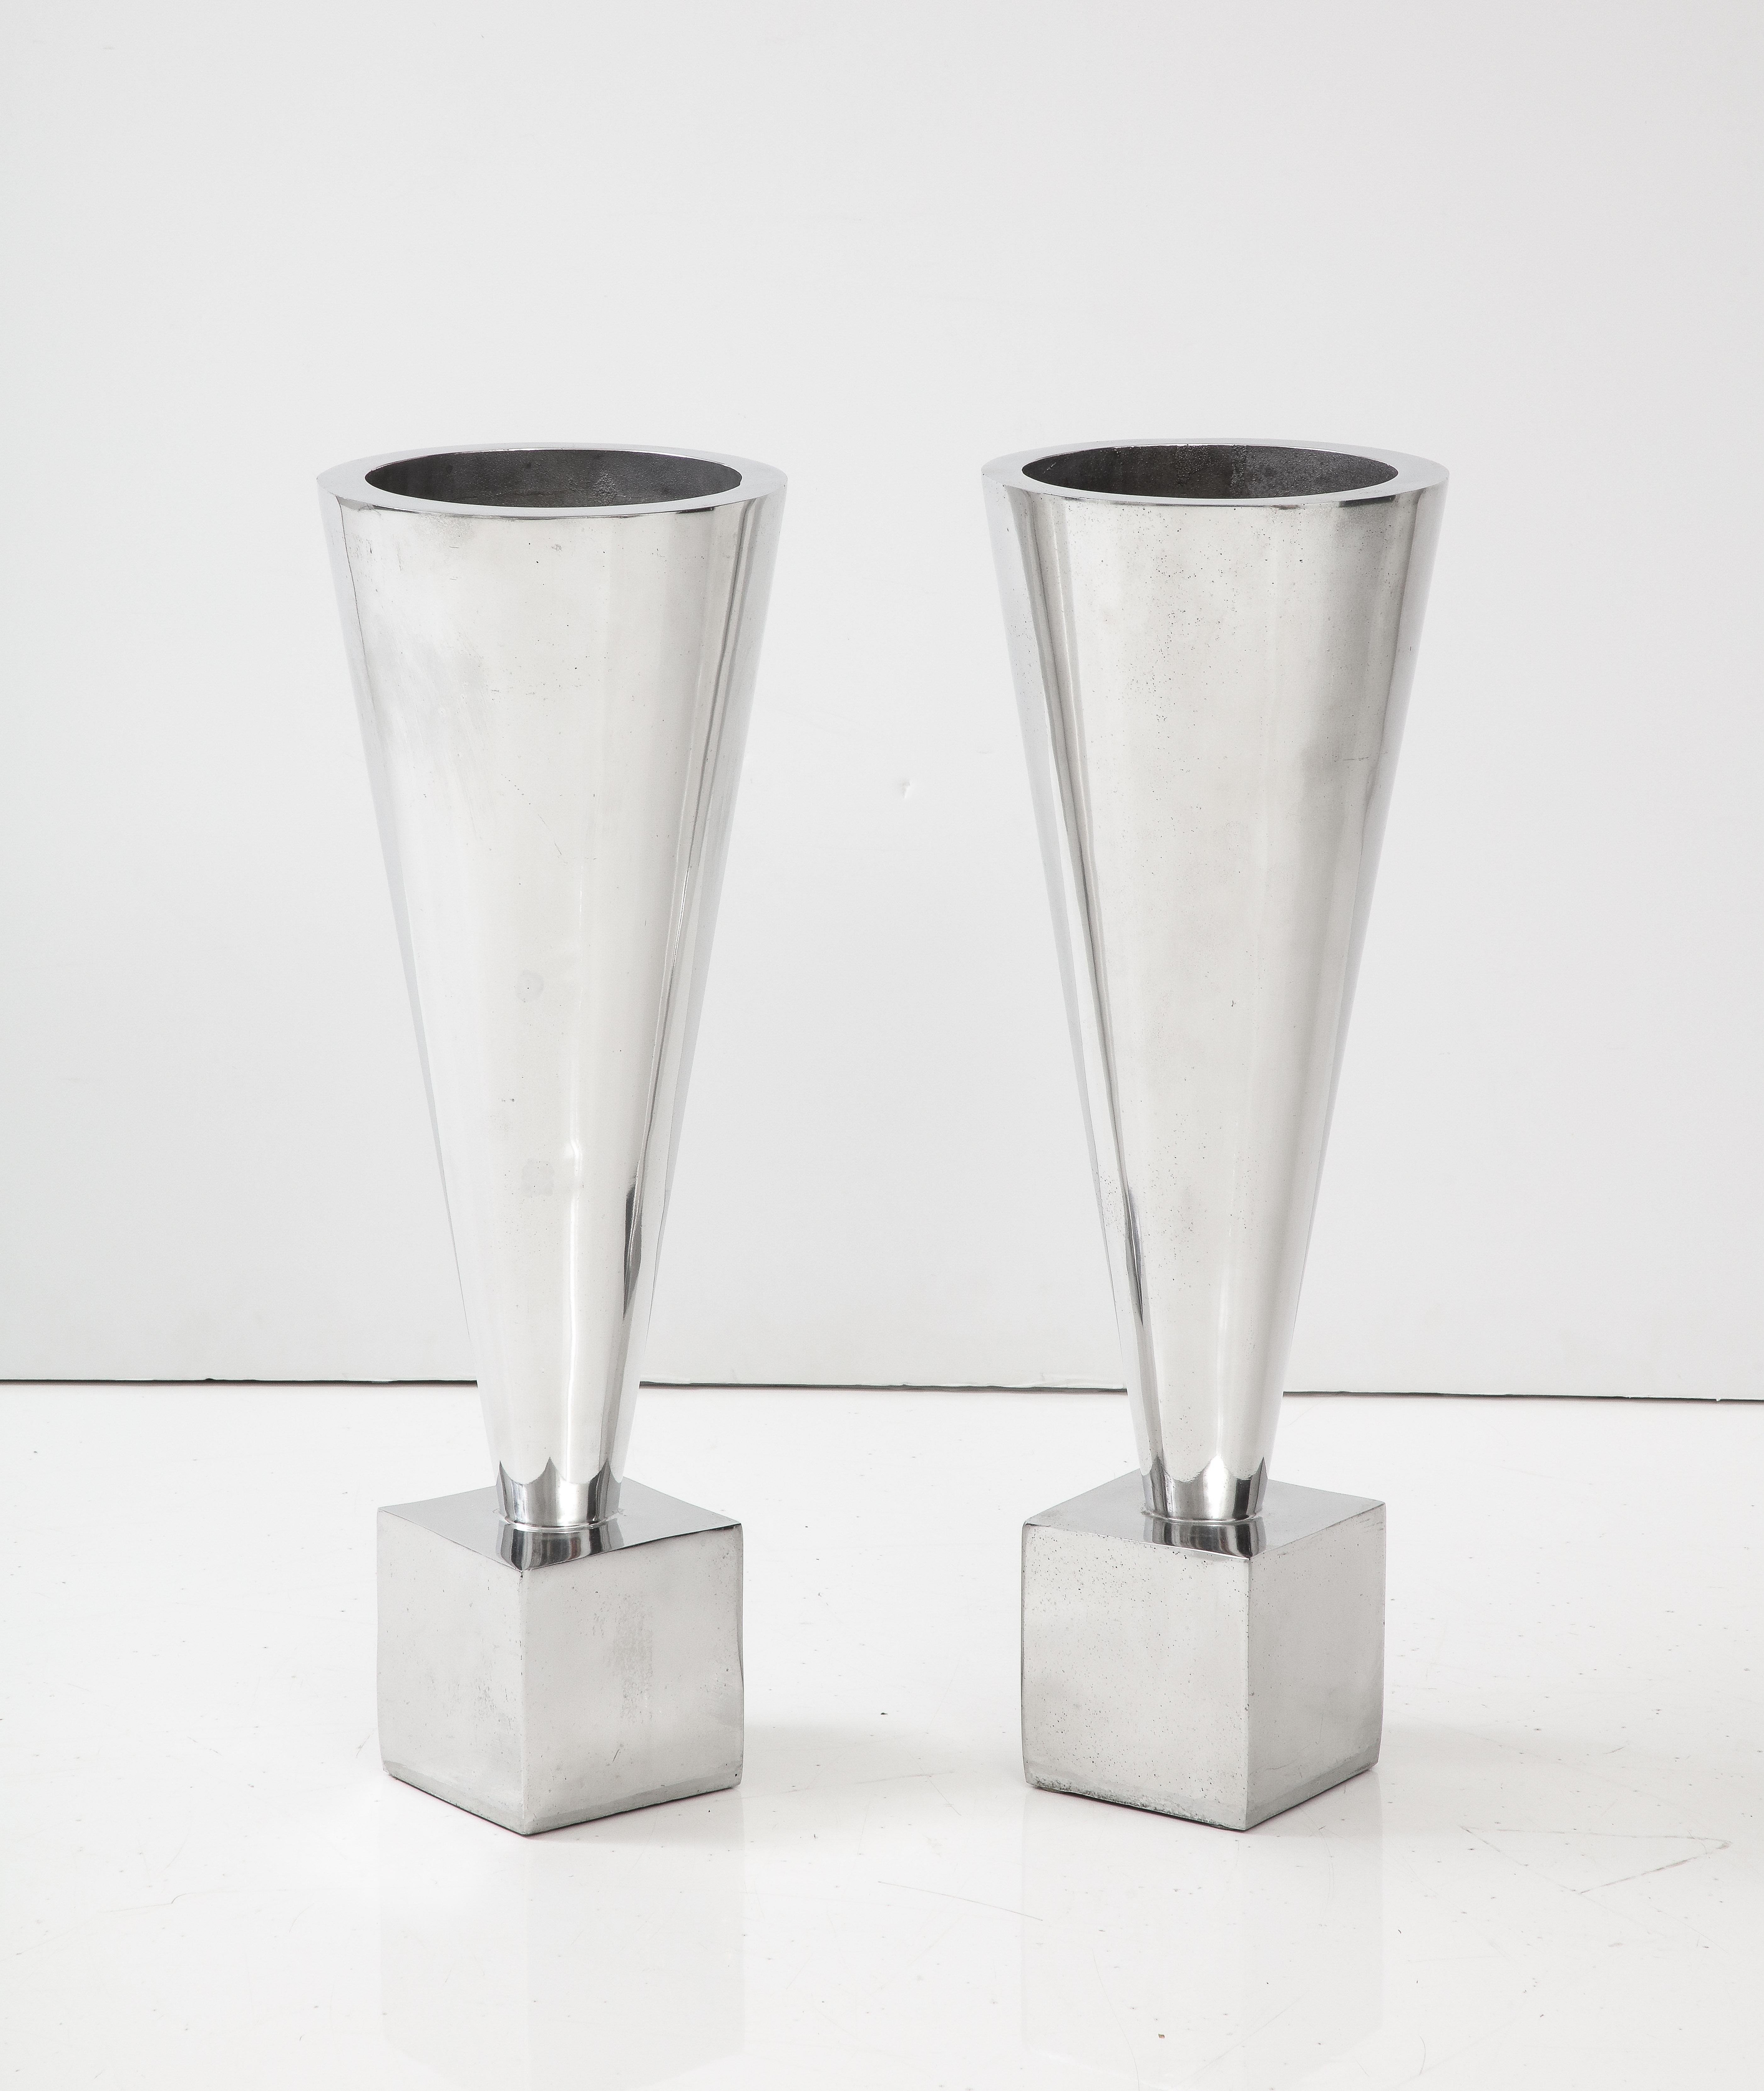 1970's Modernist Aluminum Planters/Vases  For Sale 1